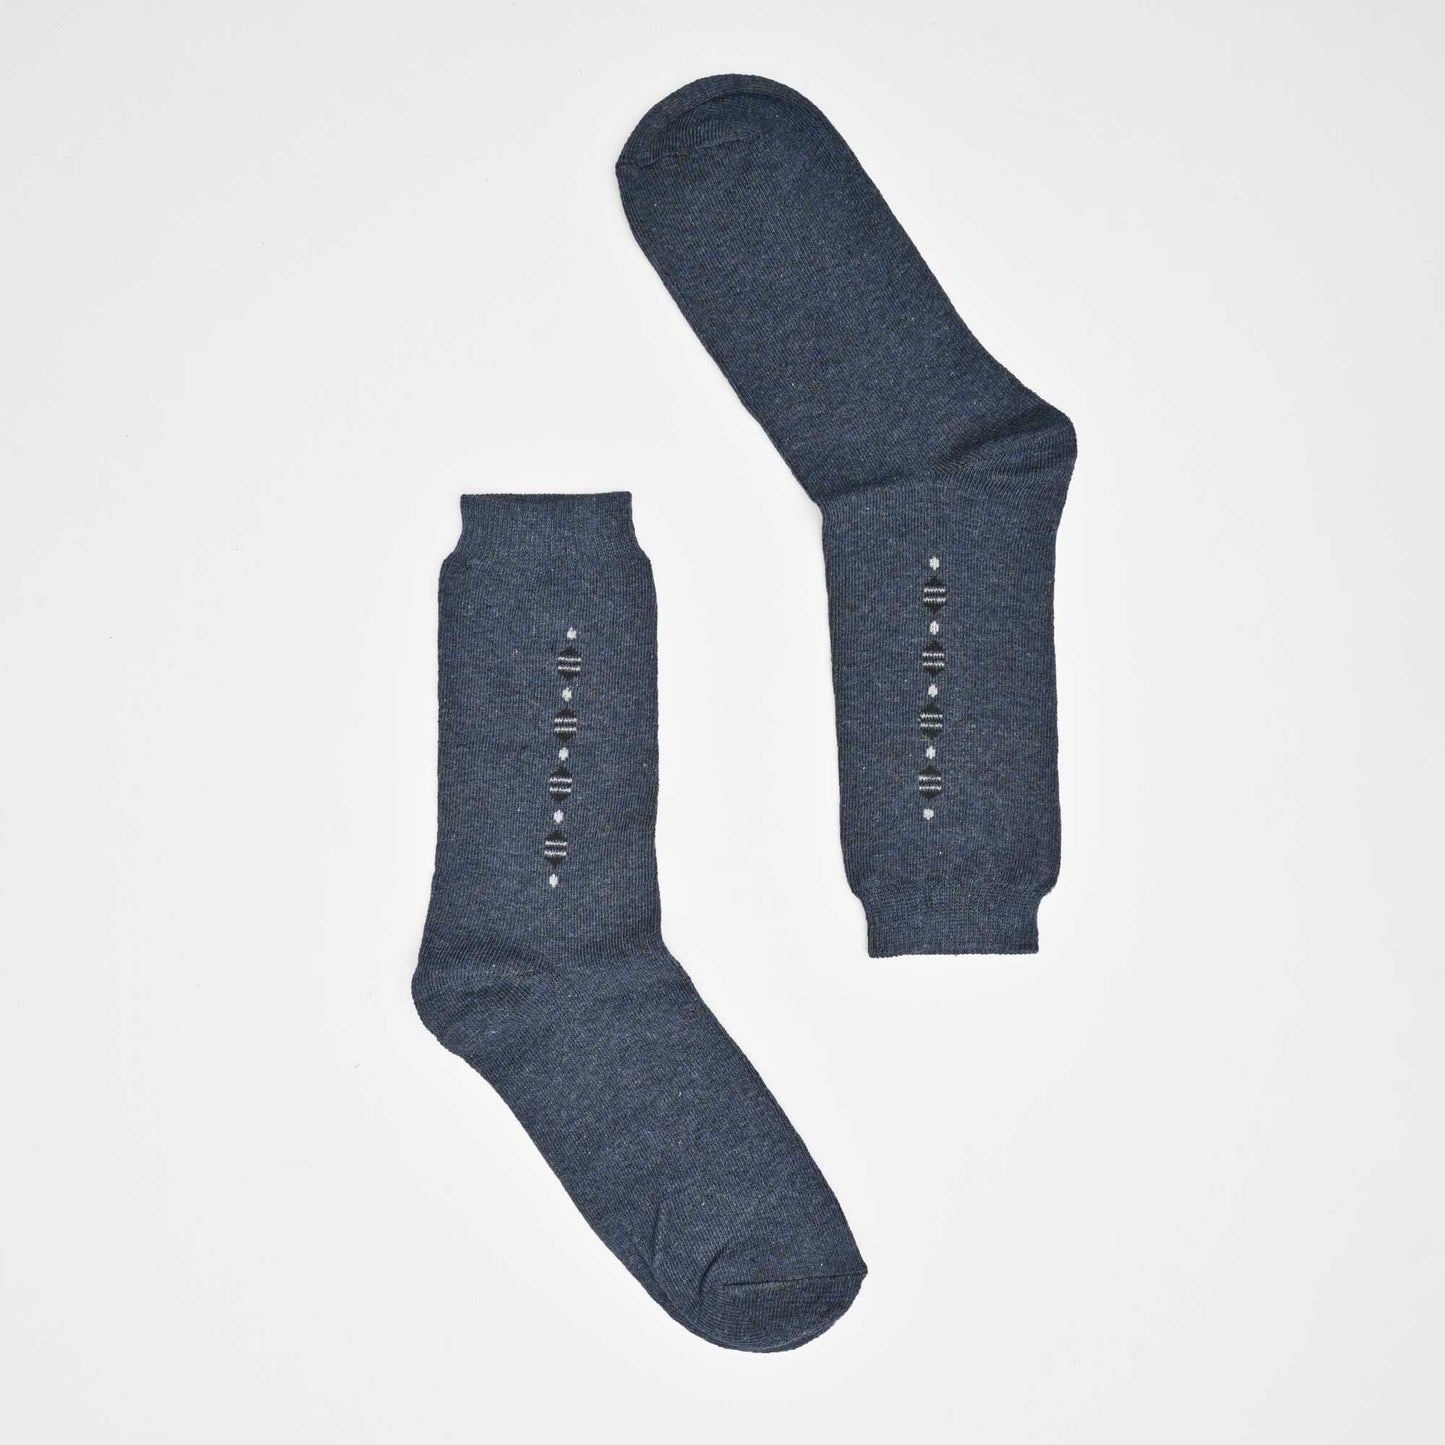 KLV Men's Algadon Classic Crew Socks Socks RAM Jeans Marl D4 EUR 40-46